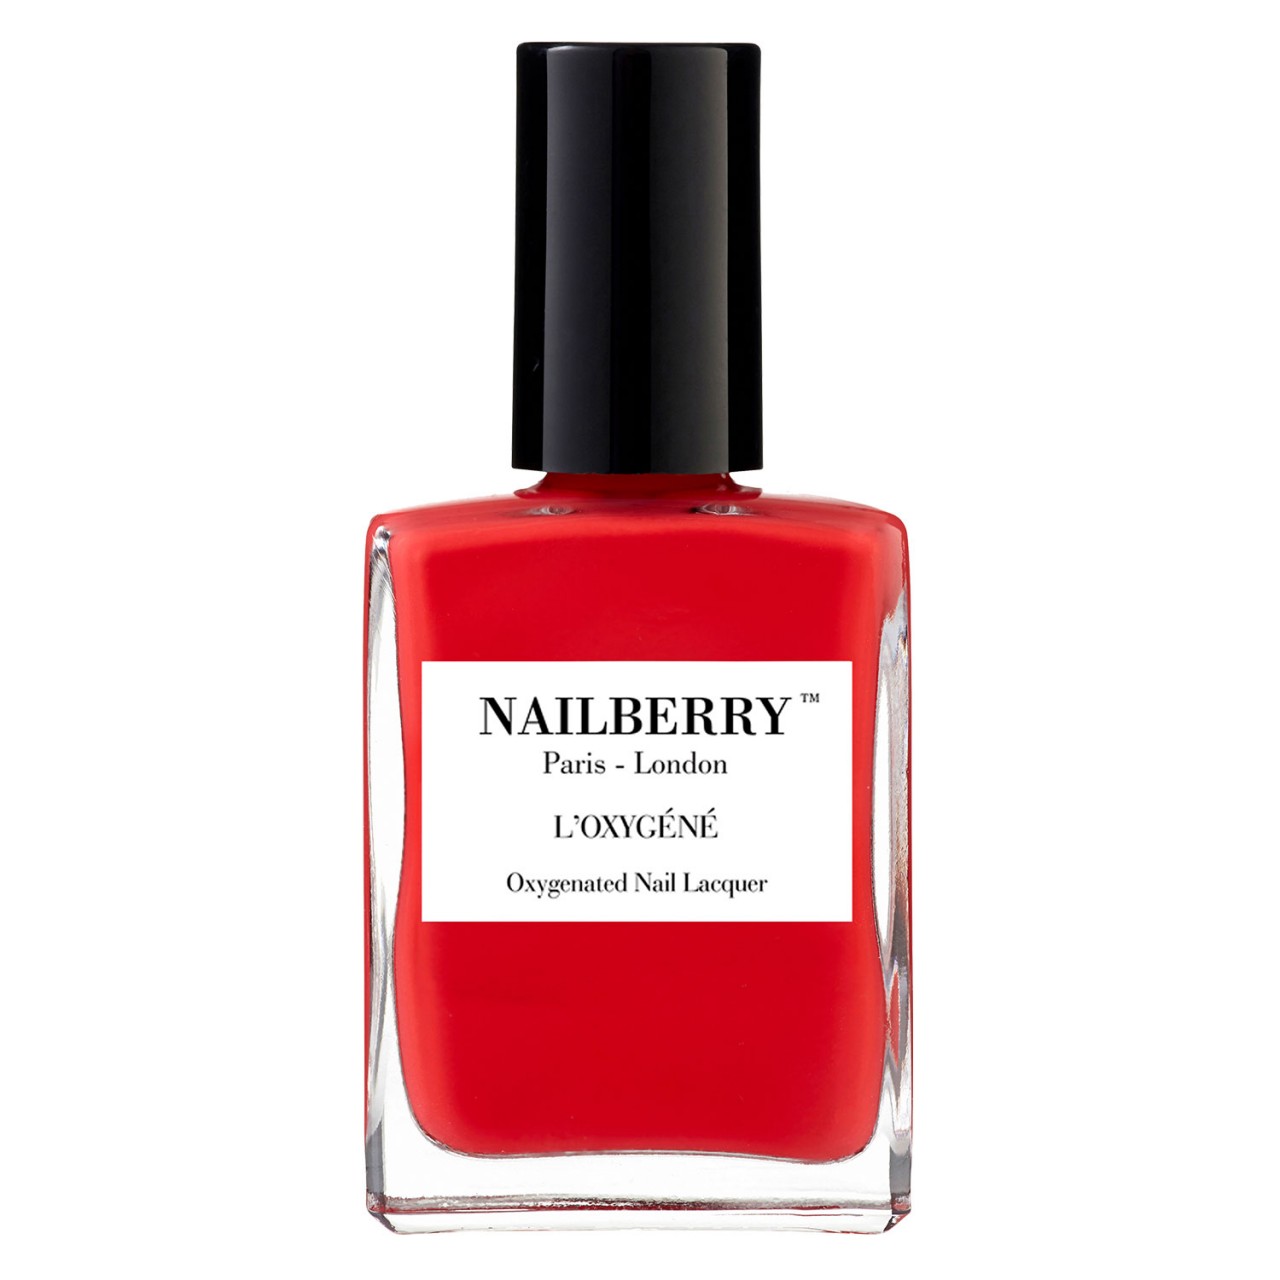 L'oxygéné - Pop my berry von Nailberry